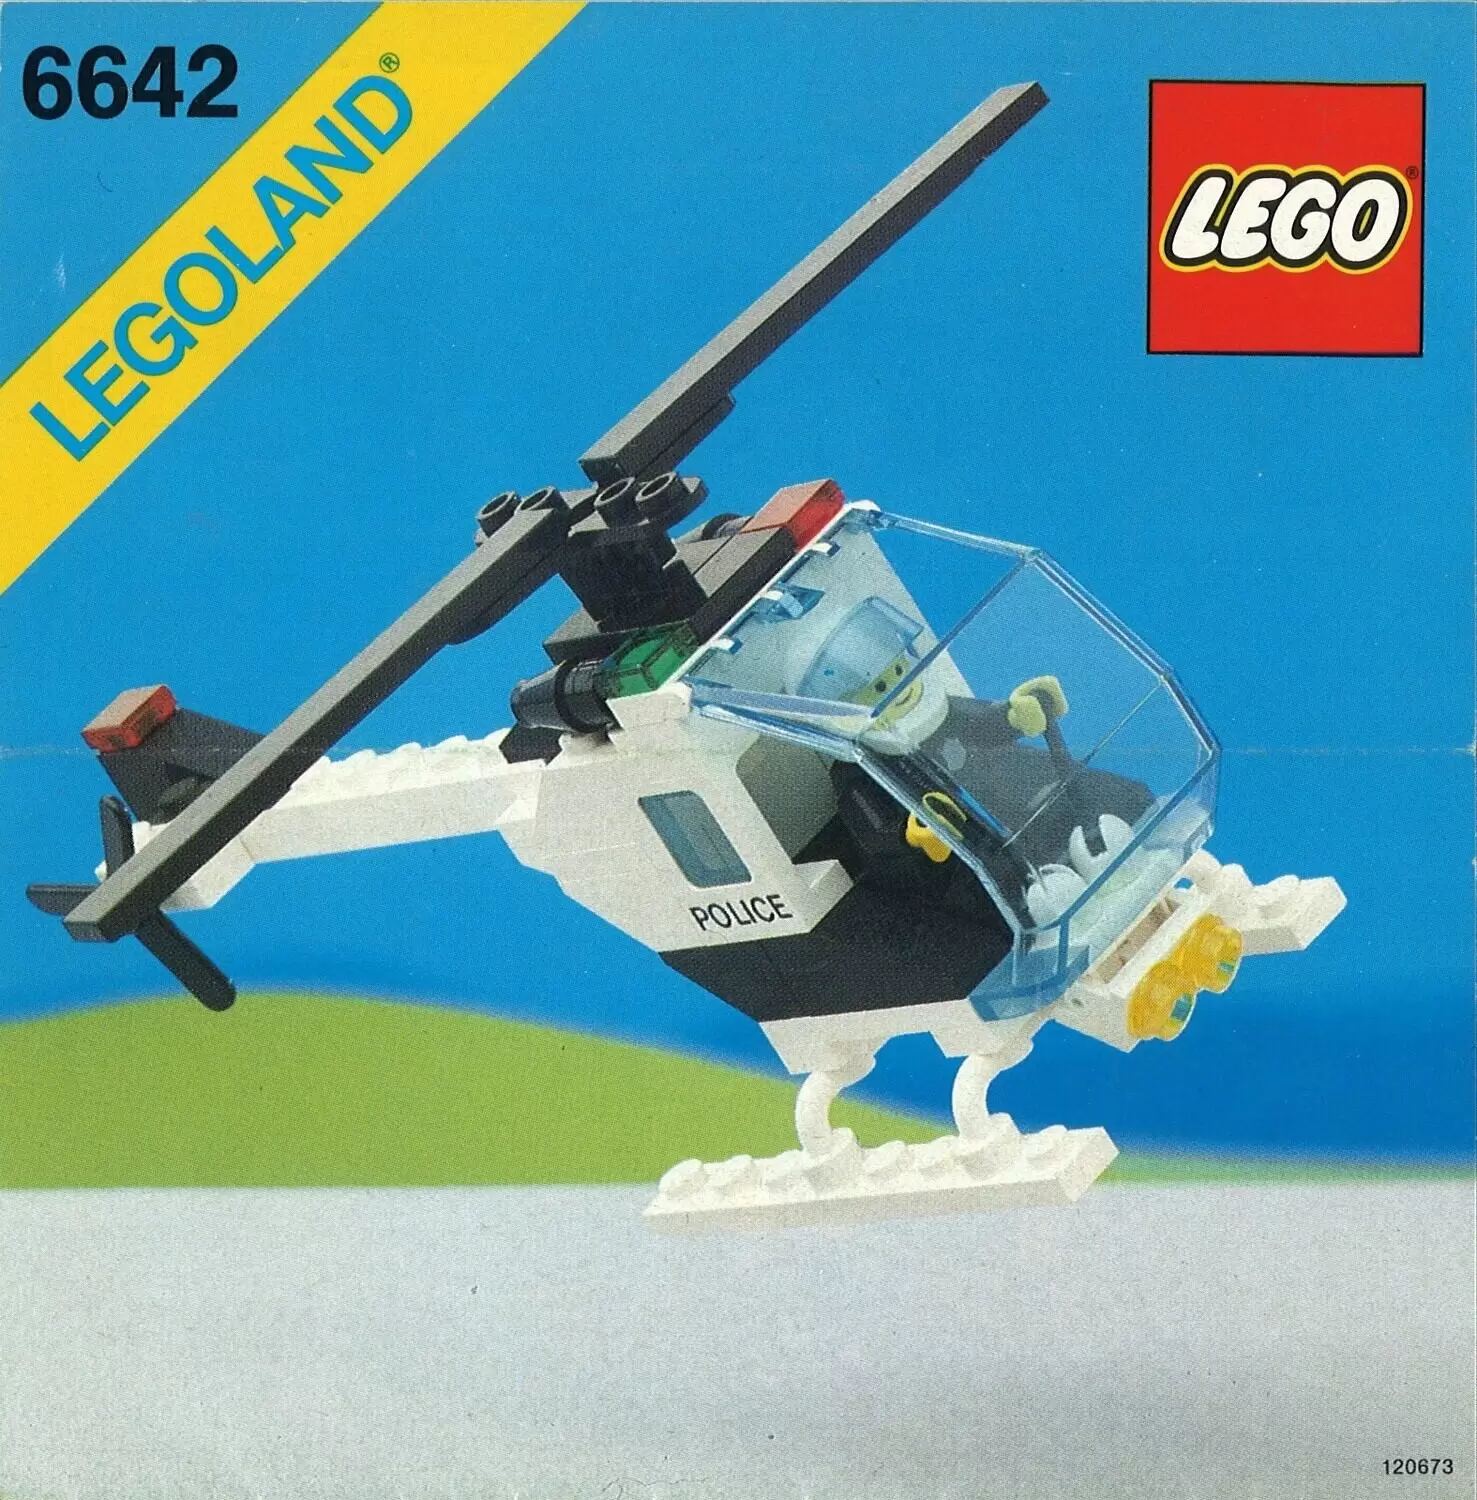 Legoland - Police Helicopter